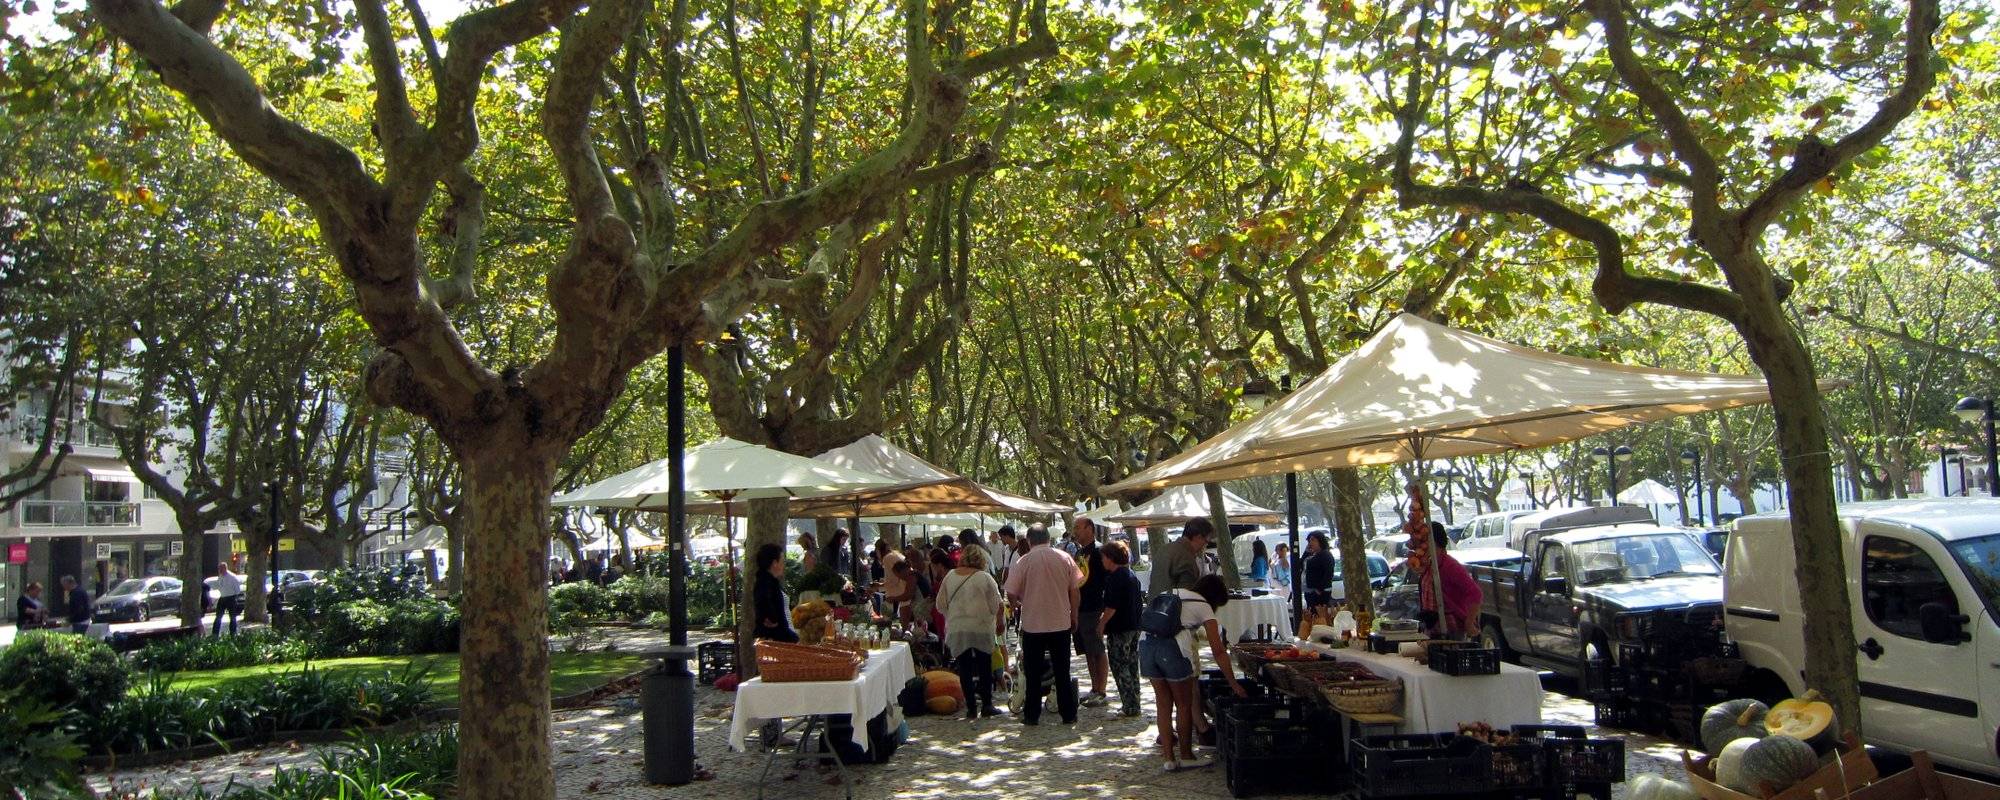 Taking a Stroll Through the Street Market of Vila do Conde (Portugal)